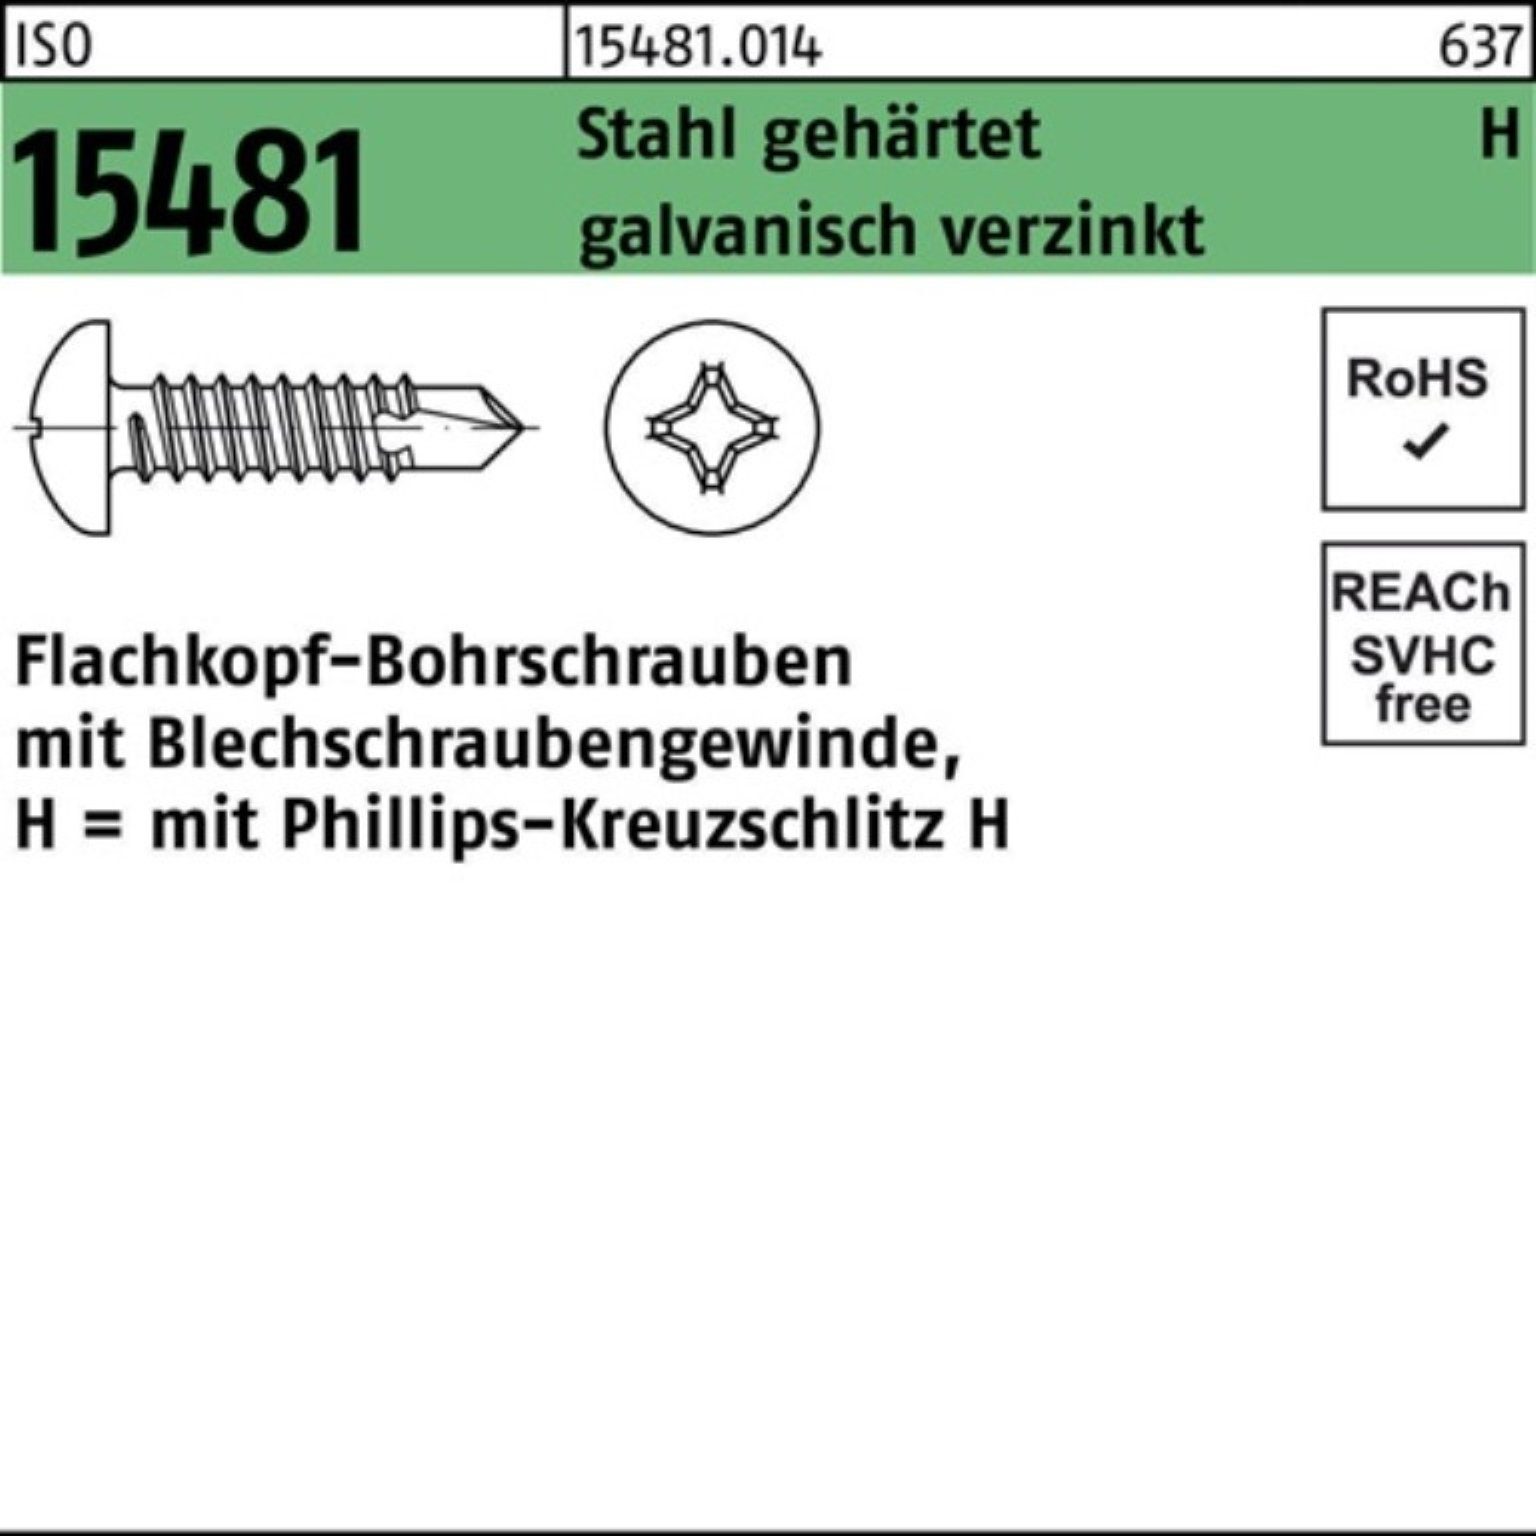 Reyher Bohrschraube 100er Pack FLAKObohrschraube ISO 15481 PH ST 4,8x110-H Stahl gehärtet